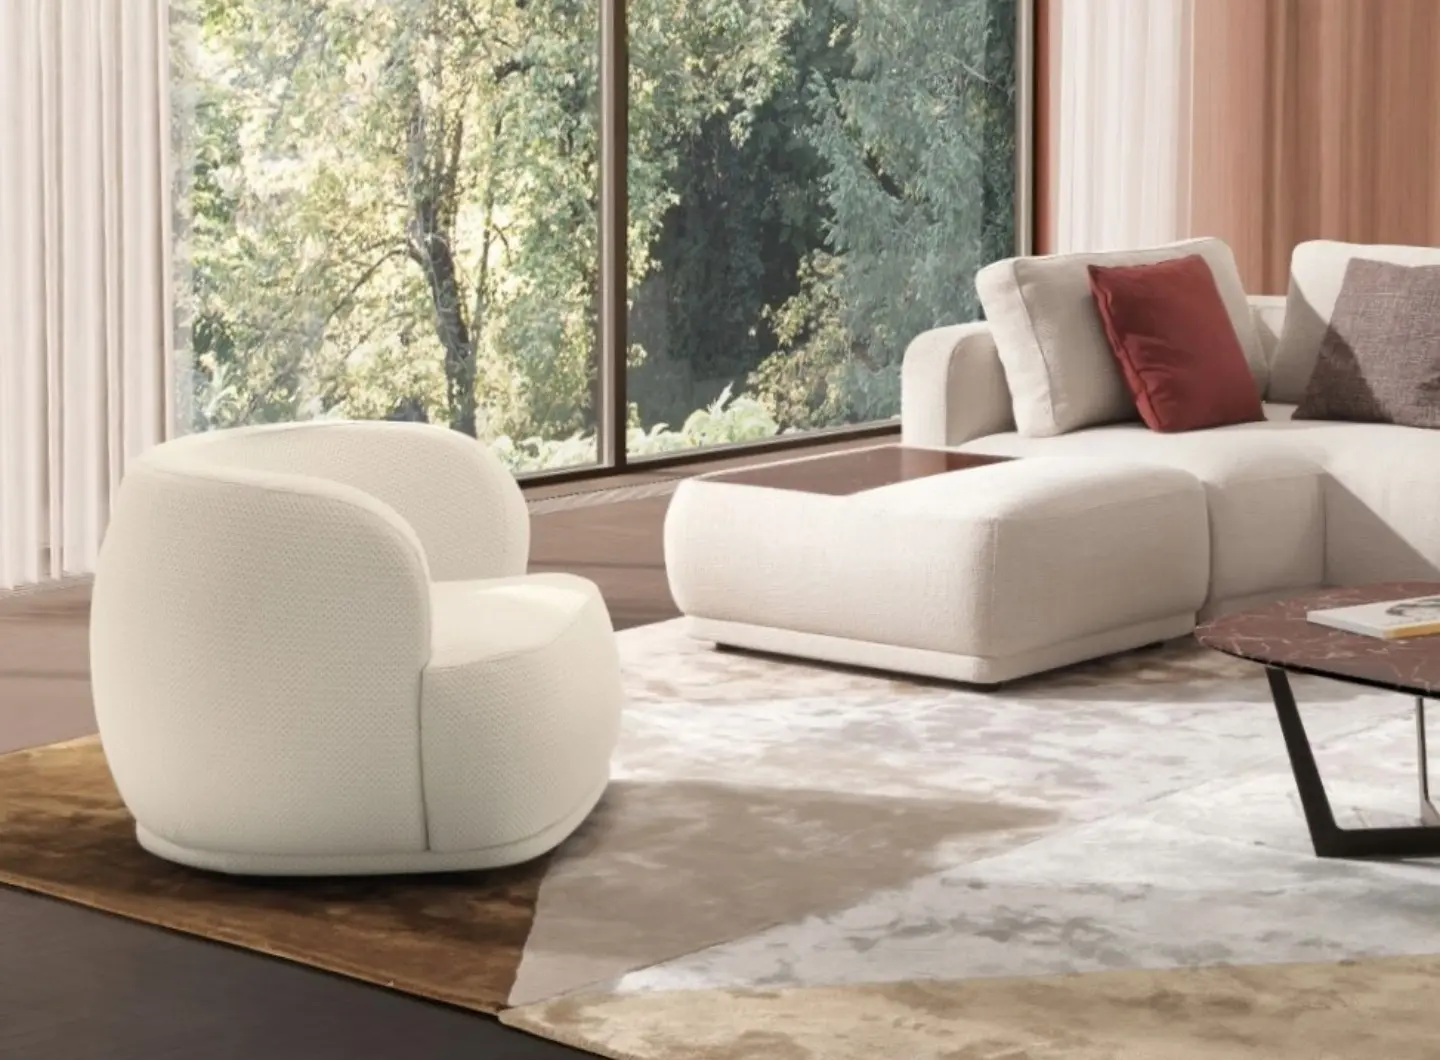 CTS Salotti - Navona armchair, Kant sofa.